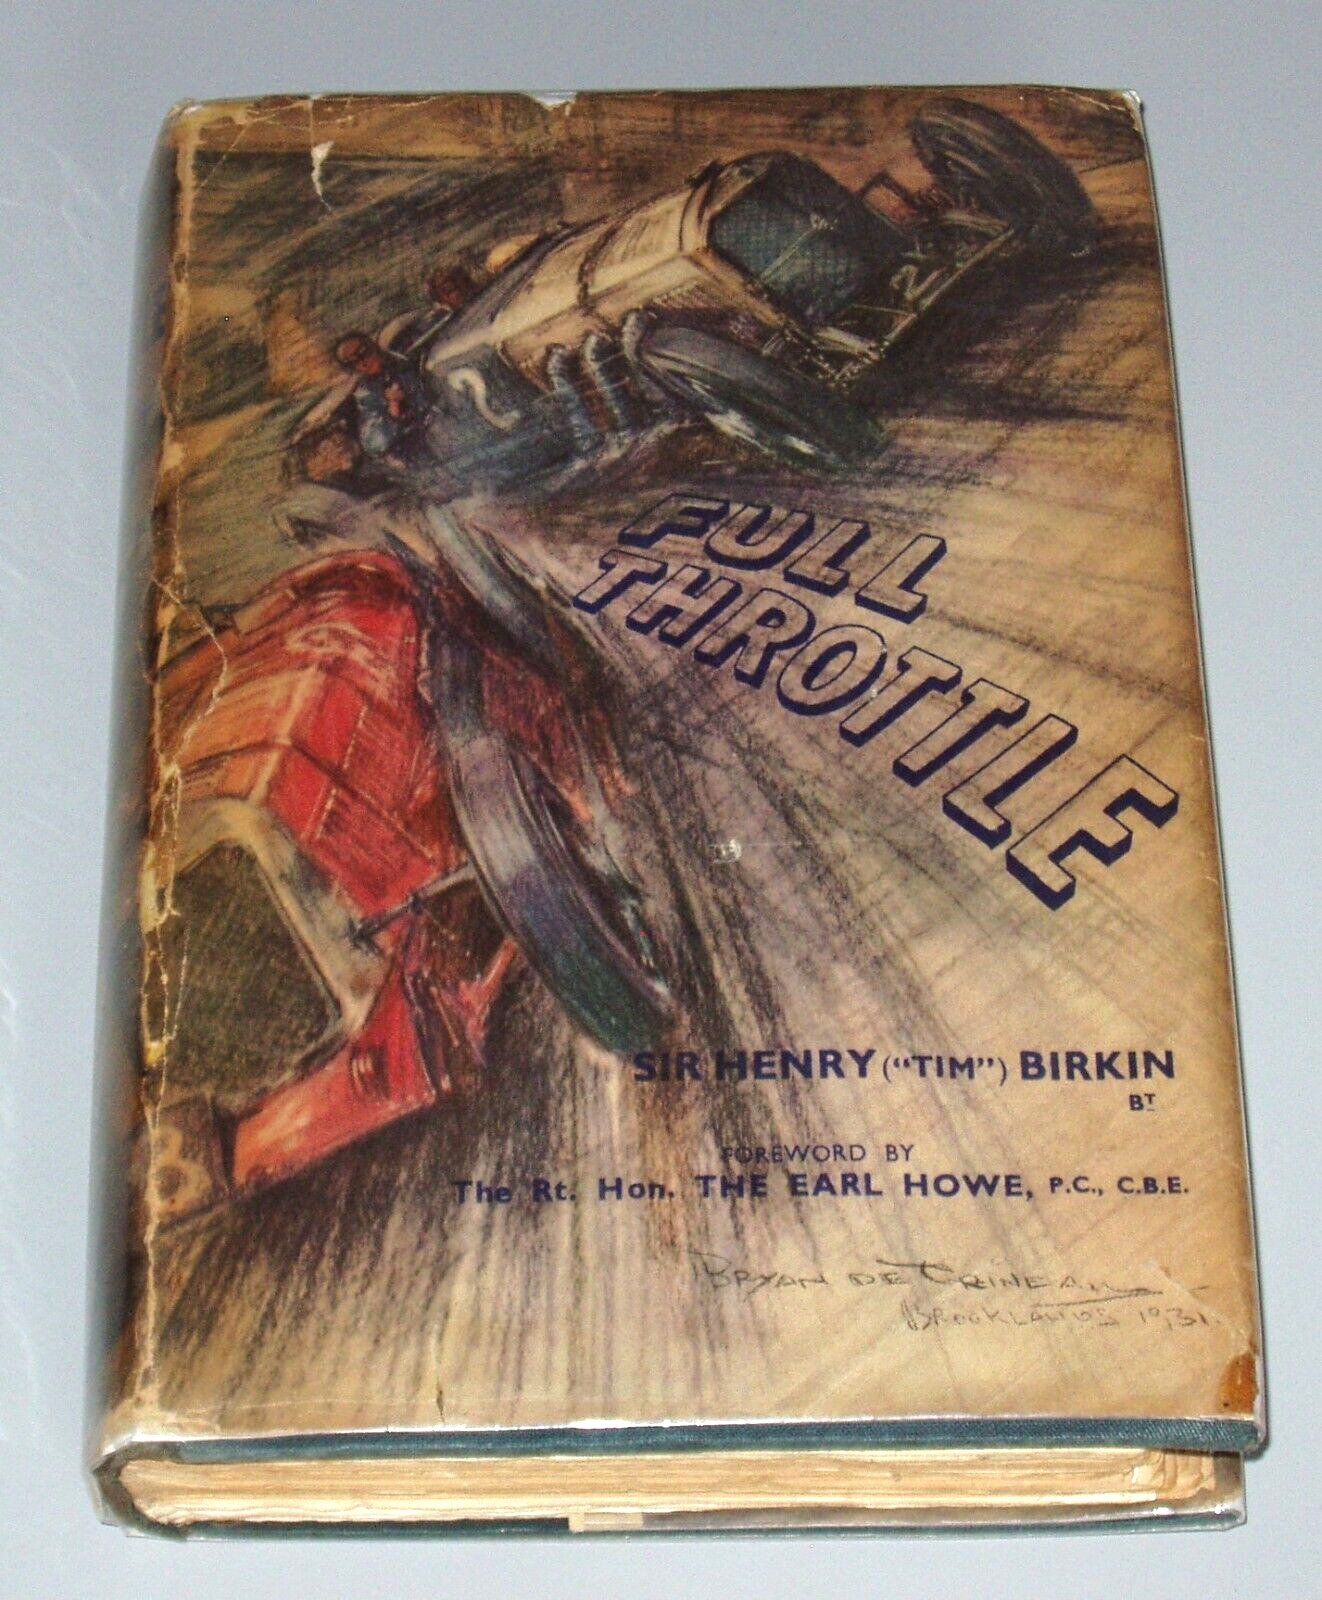 FULL THROTTLE by Sir Henry Tim Birkin - HARDBOUND 1932 2nd Edition - ORIGINAL DJ